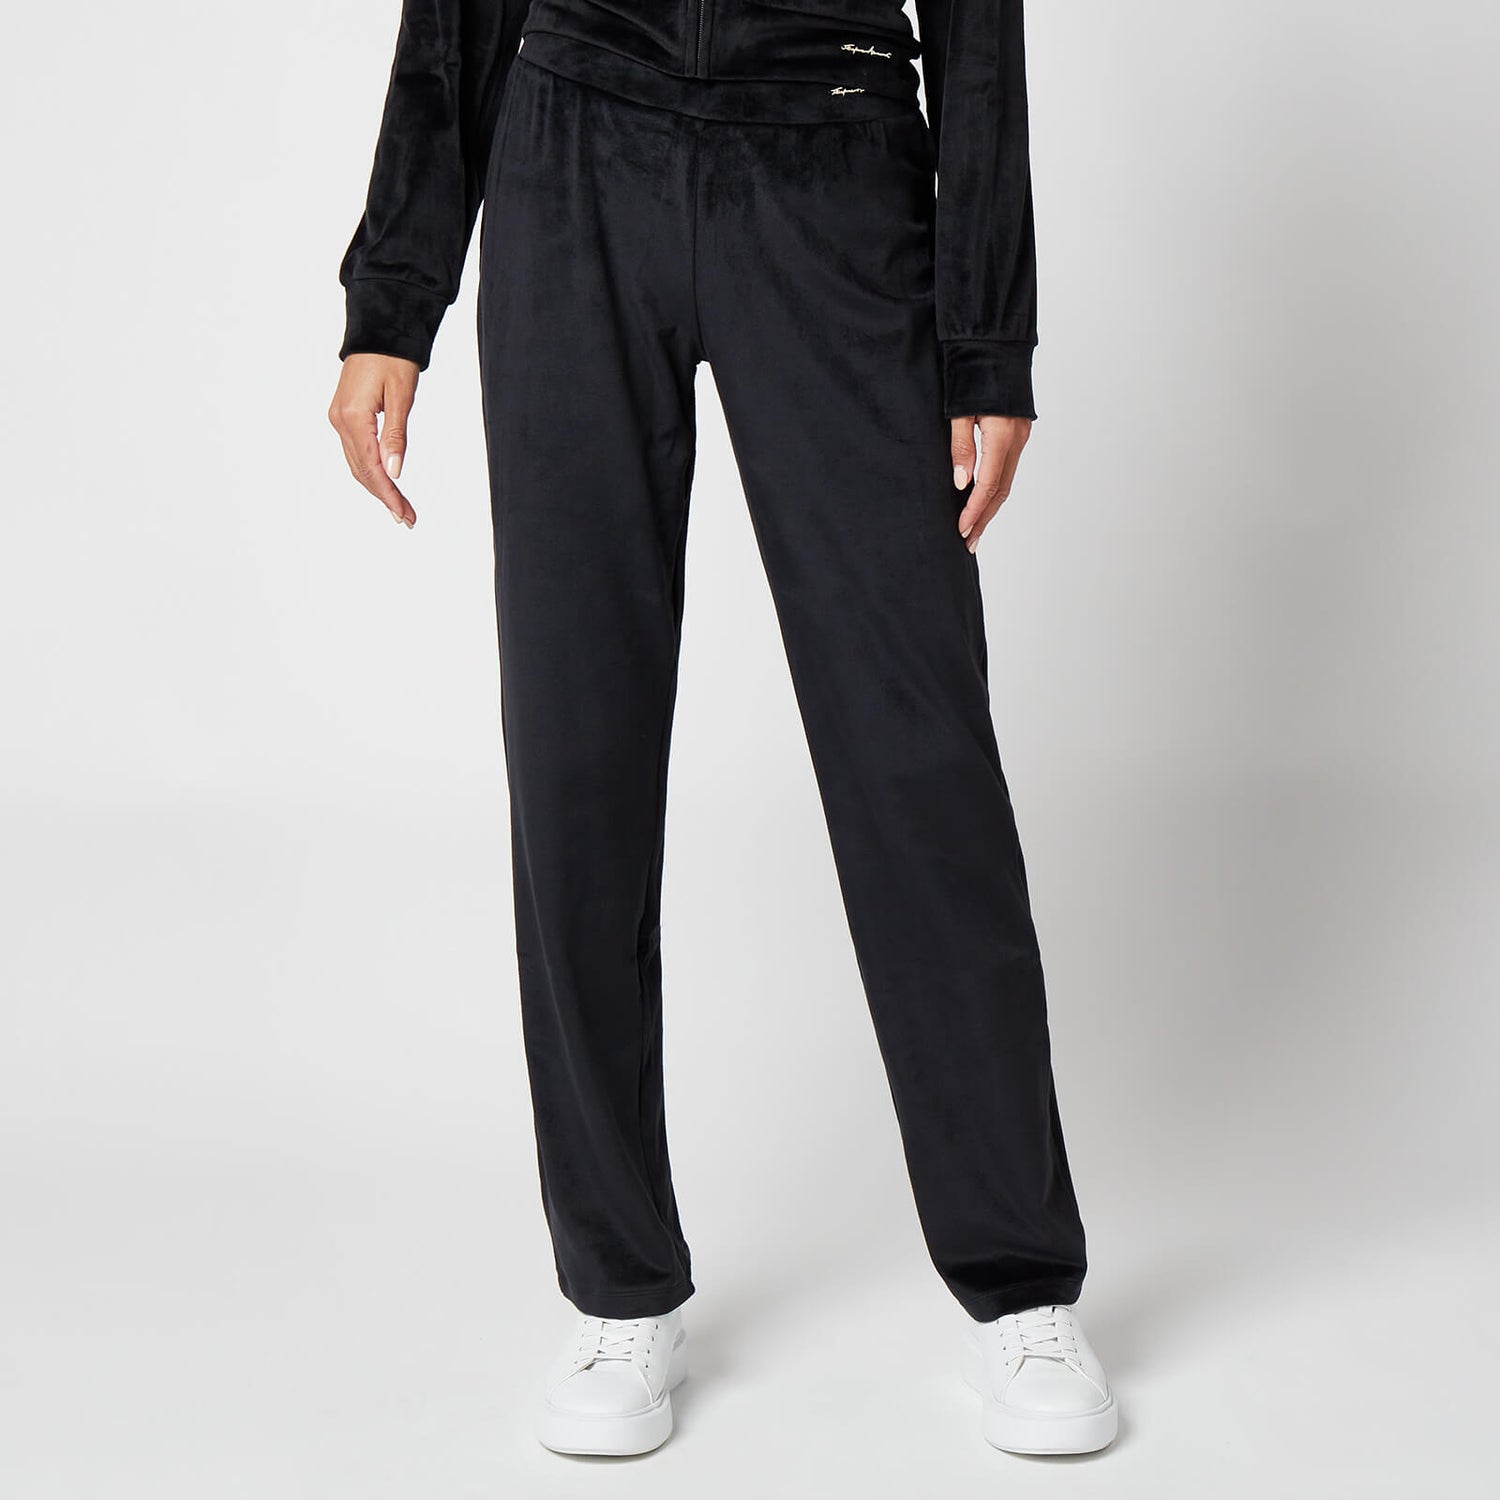 Emporio Armani Loungewear Women's Shiny Velvet Regular Fit Pants - Black - L